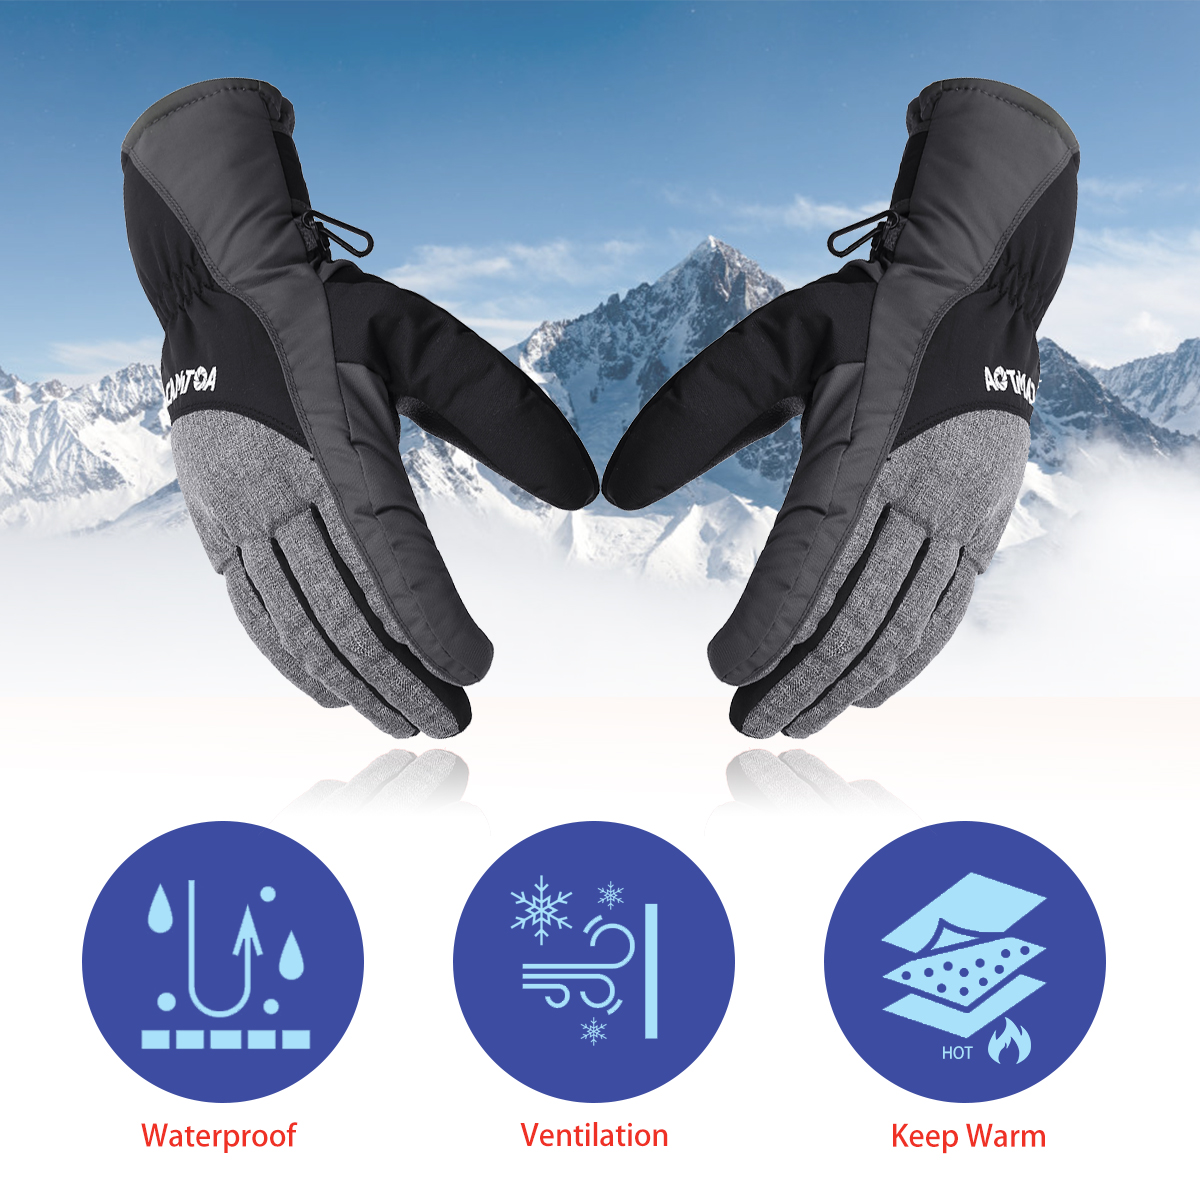 Camtoa-Ski-Gloves-Winter-Gloves-for-Men-Women-3M-Thinsulate-Warm-Waterproof-Breathable-Snow-Gloves-1402204